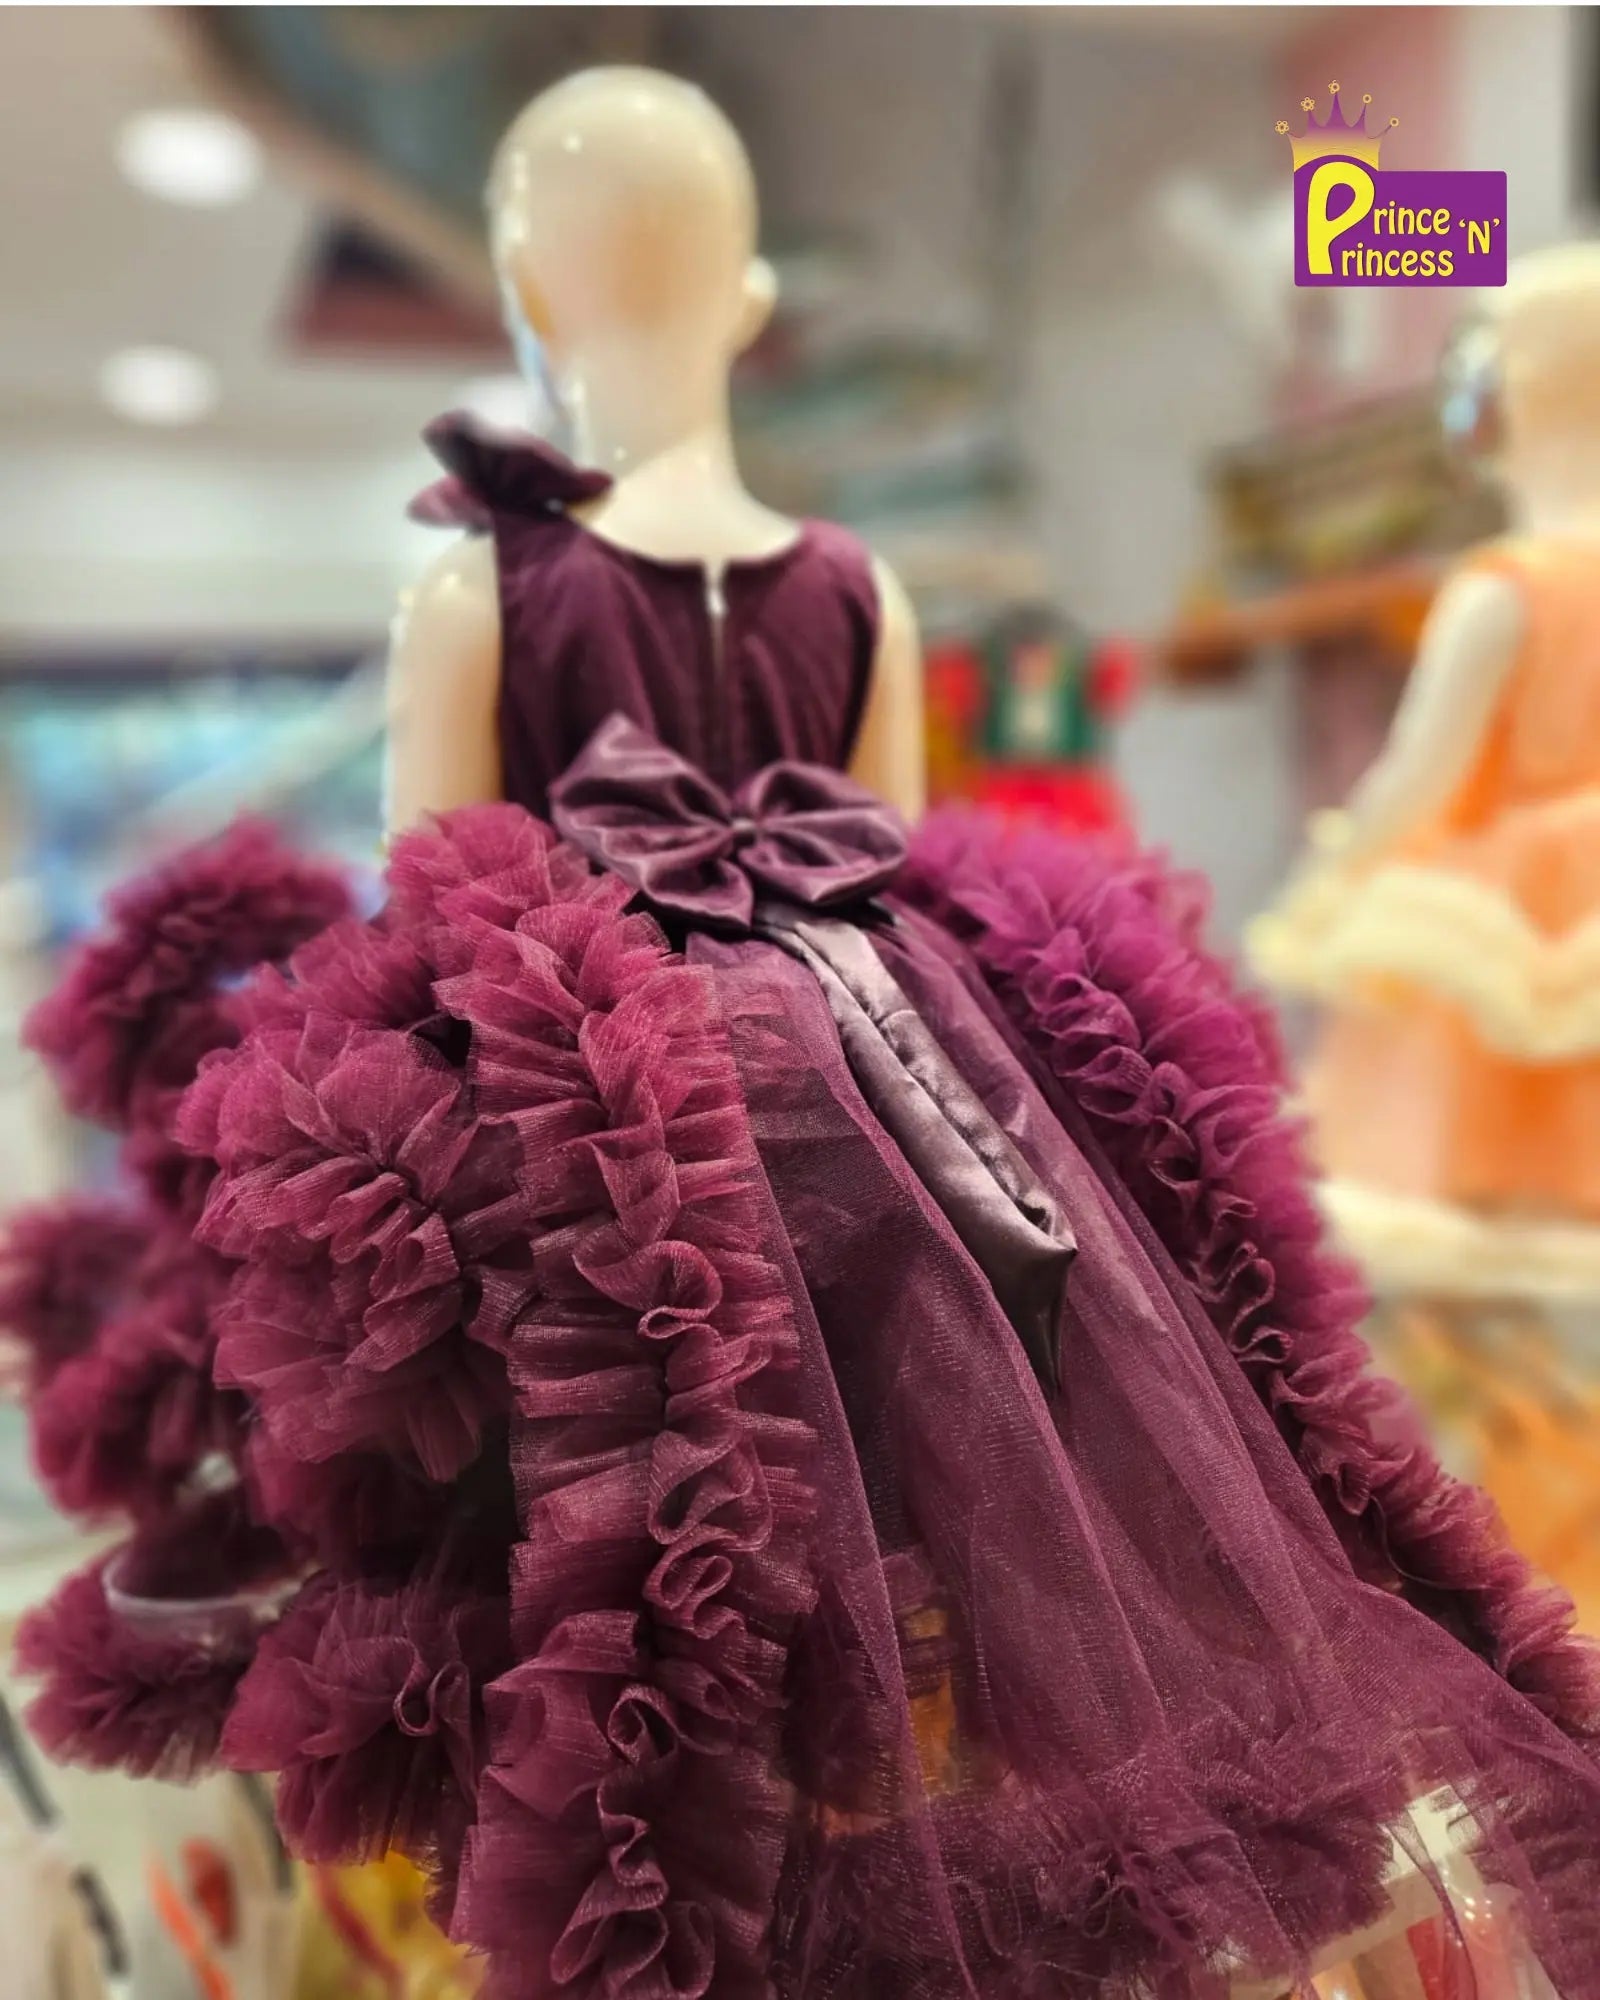 Princess Costume Set in Blush - Joyfolie